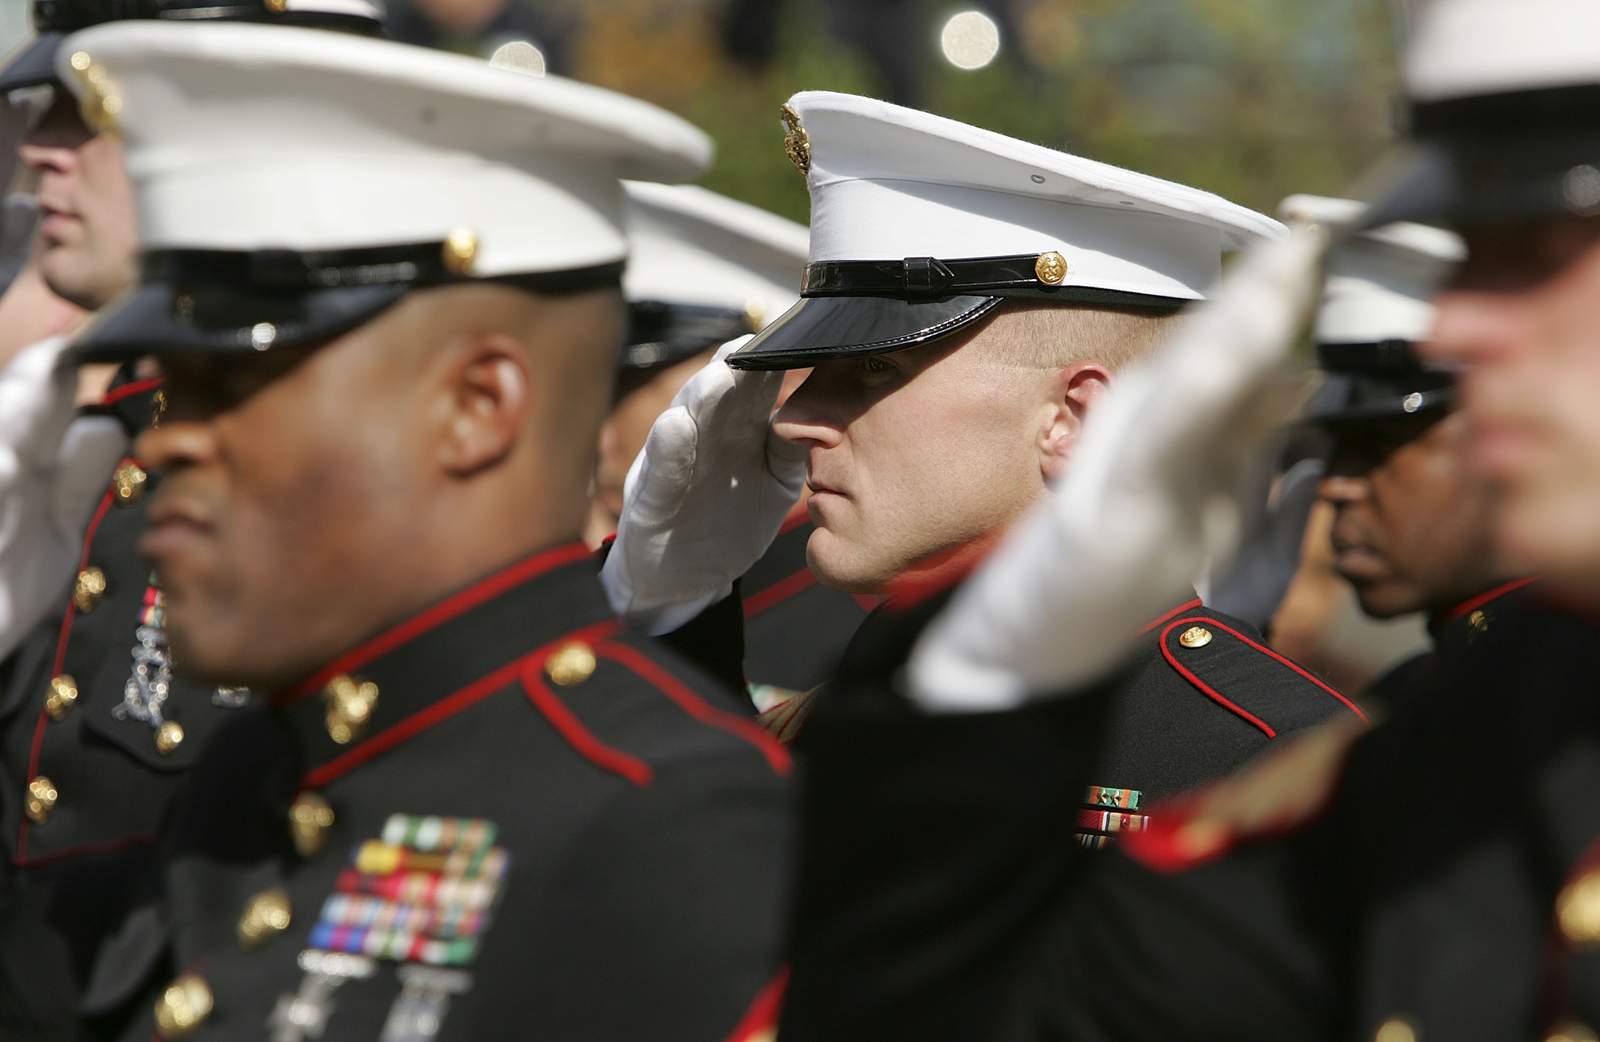 United States Marine Corps celebrates 245th birthday on Tuesday